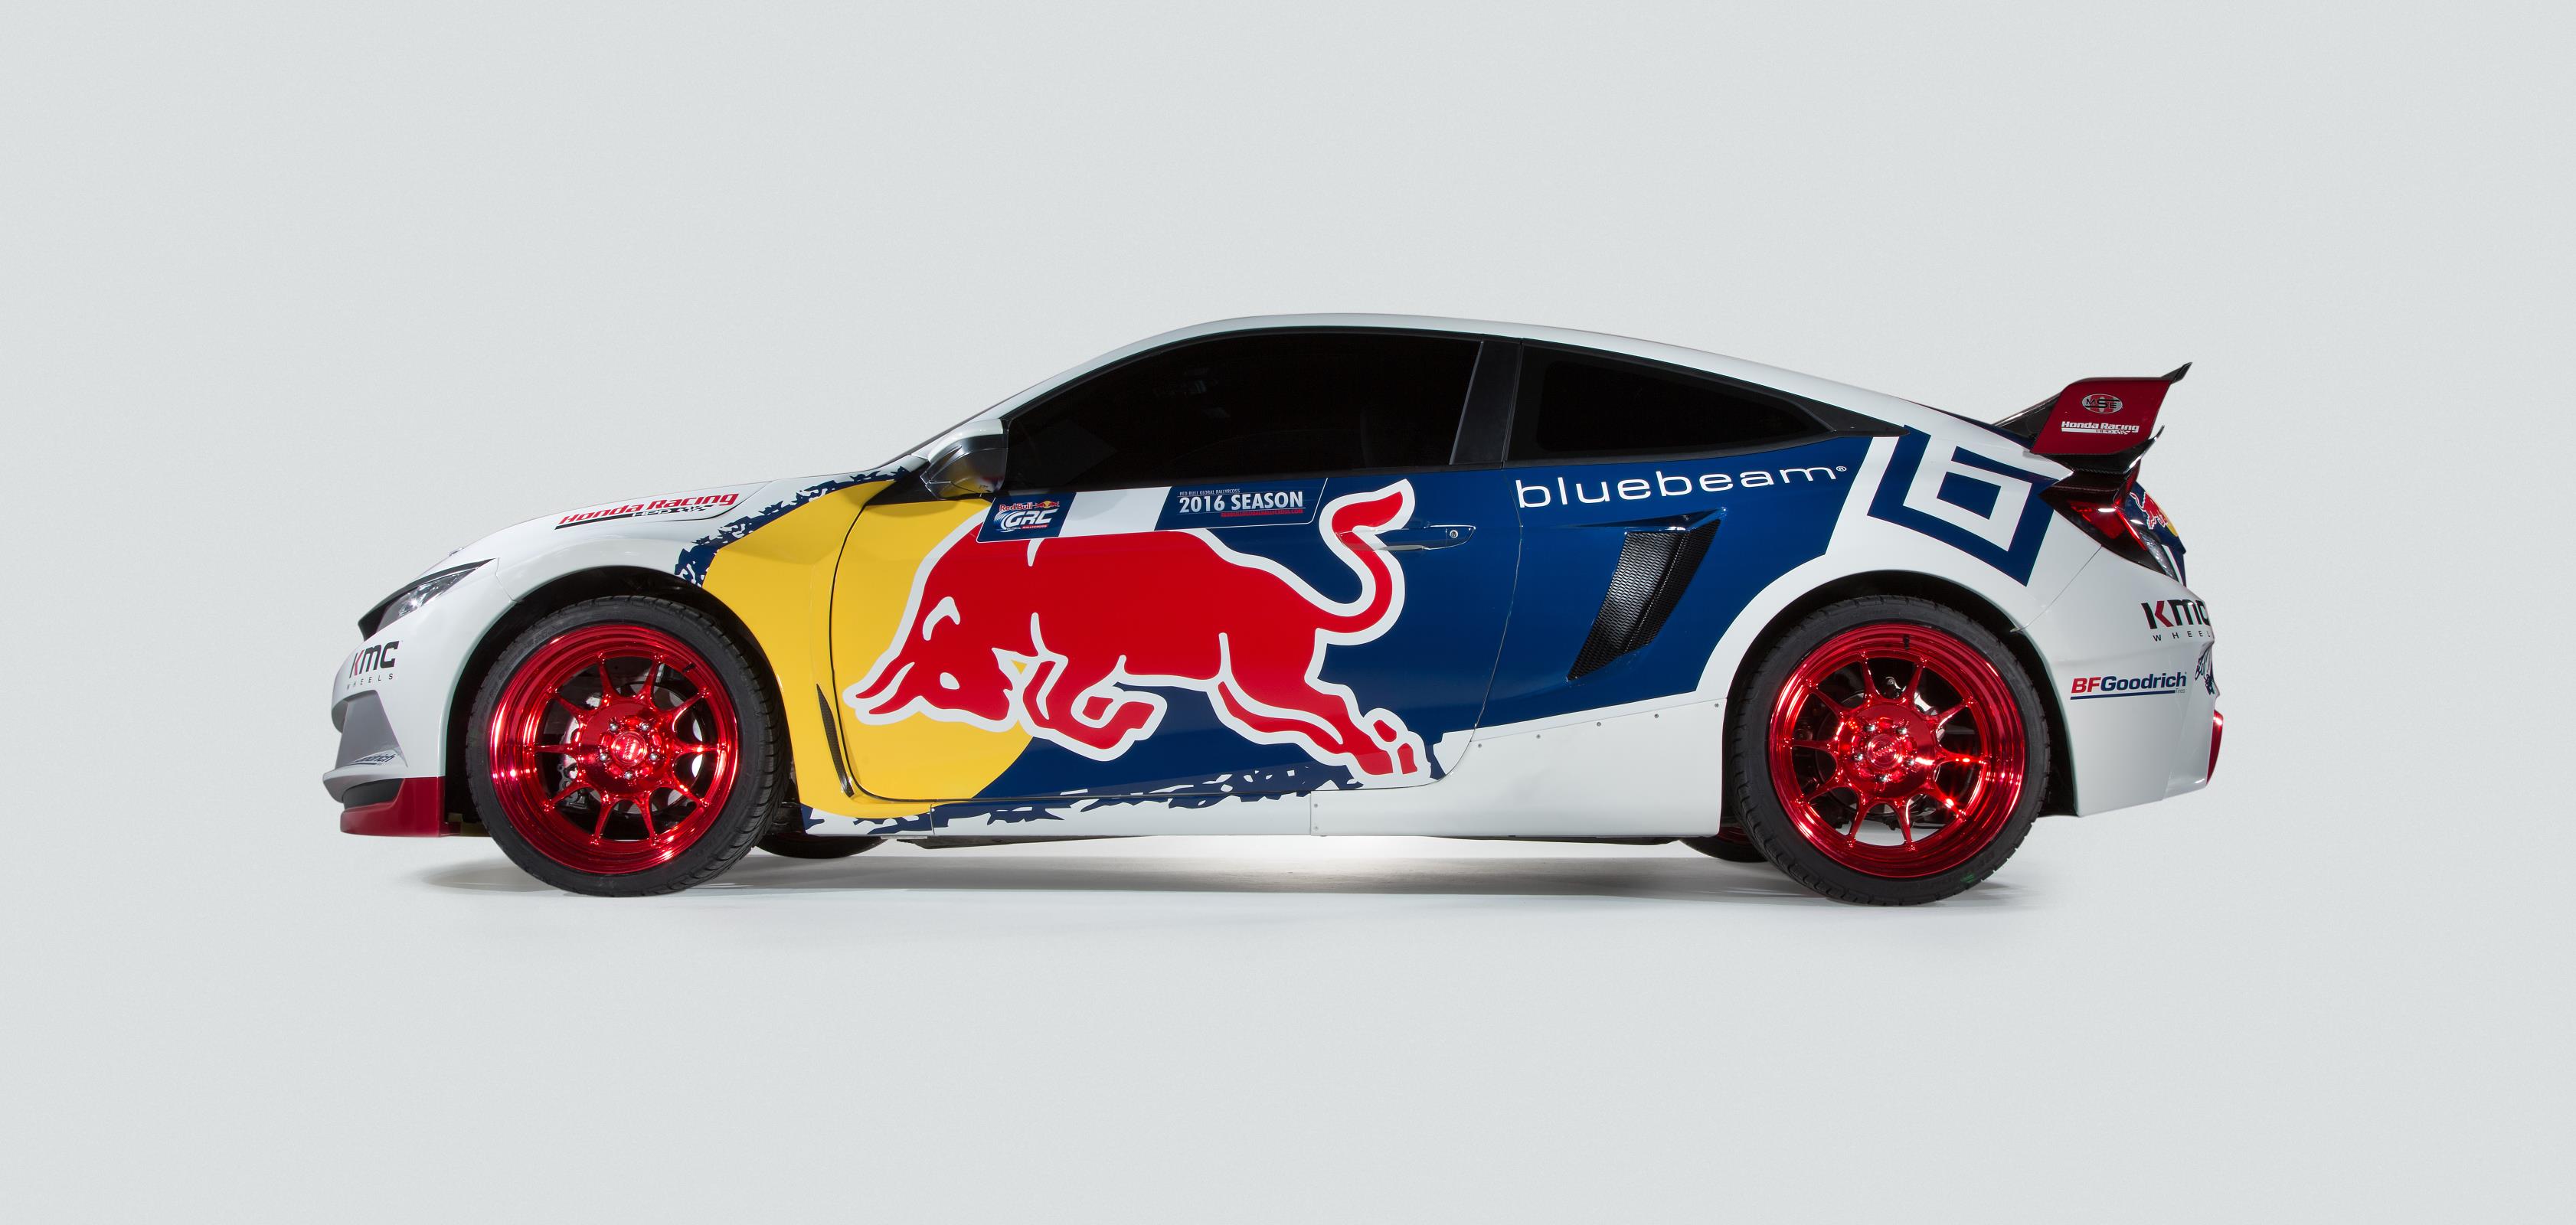 2016 Honda  Civic Coupe Red Bull Global Rallycross Race Car 